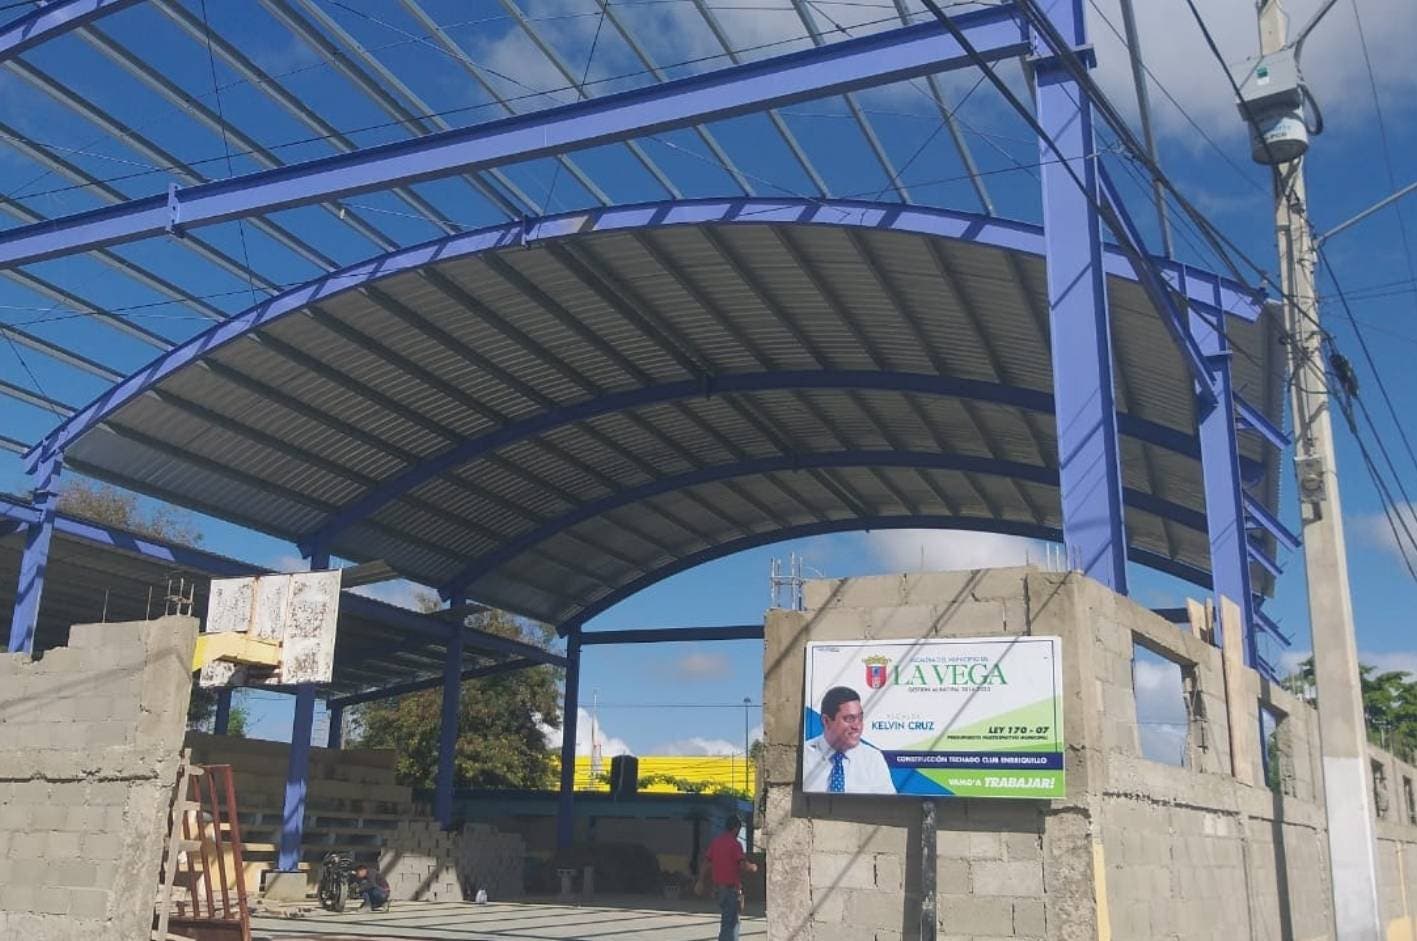 Alcalde de La Vega construye moderno techado baloncesto